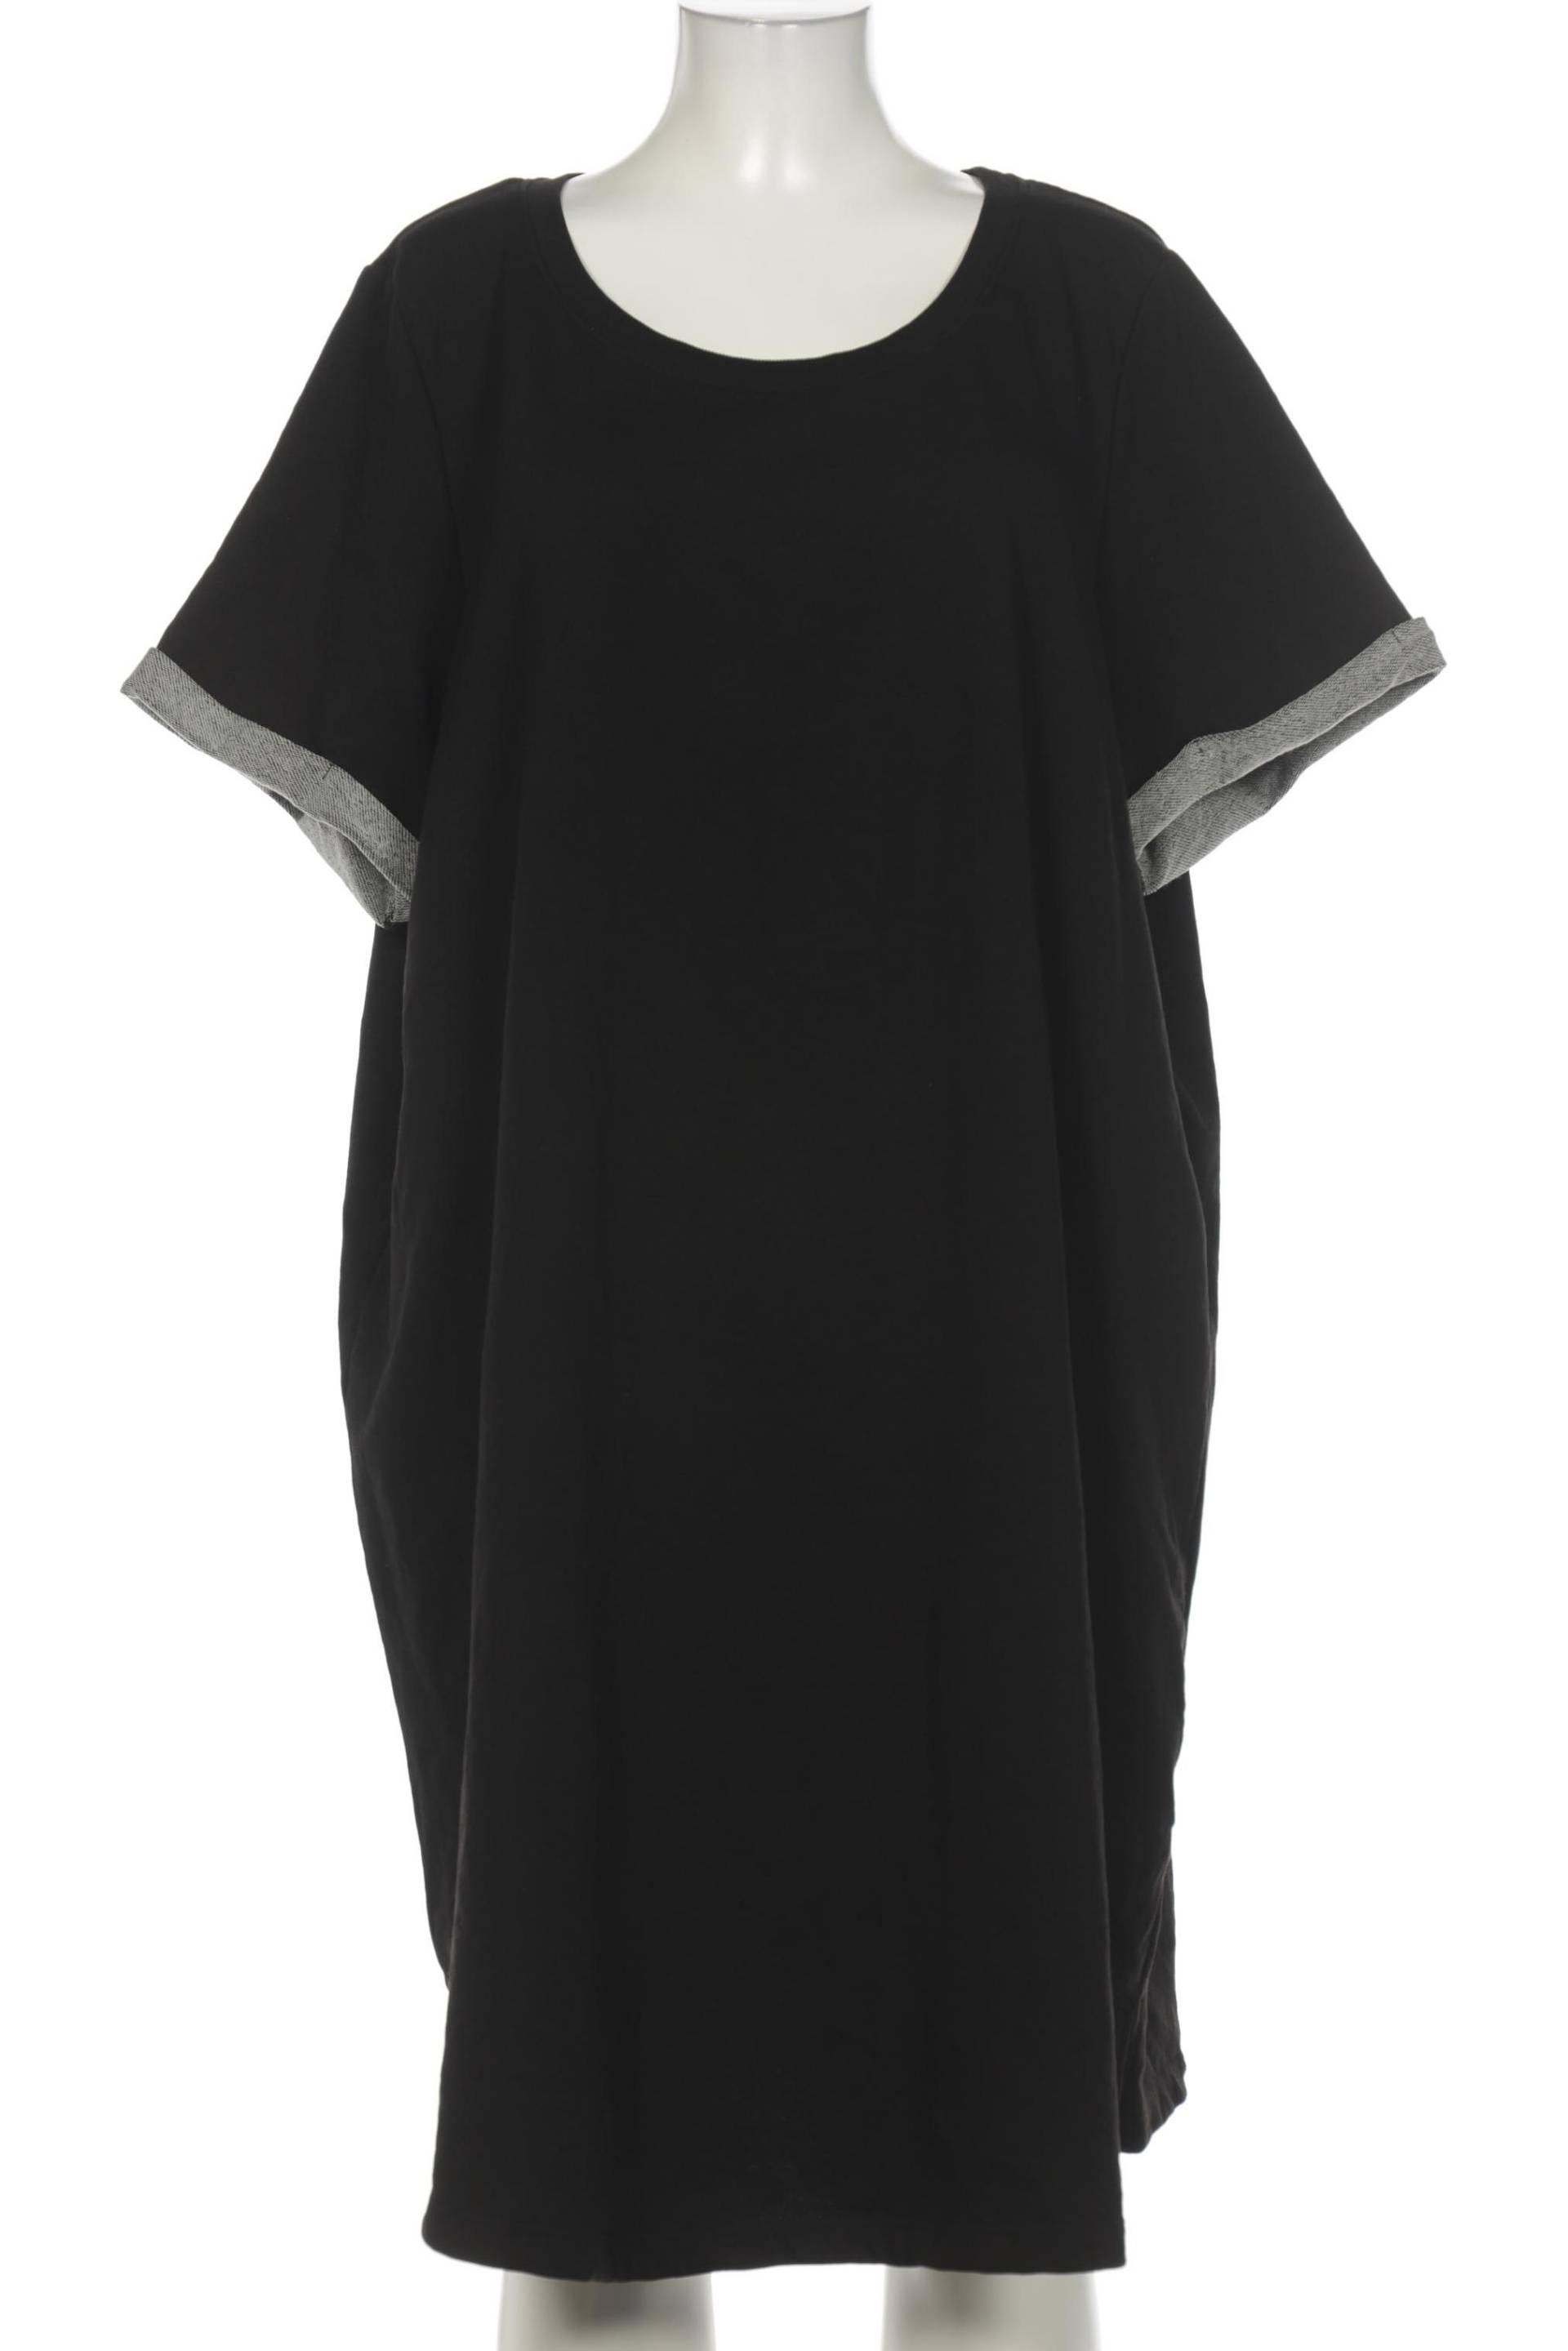 Zizzi Damen Kleid, schwarz, Gr. 44 von Zizzi